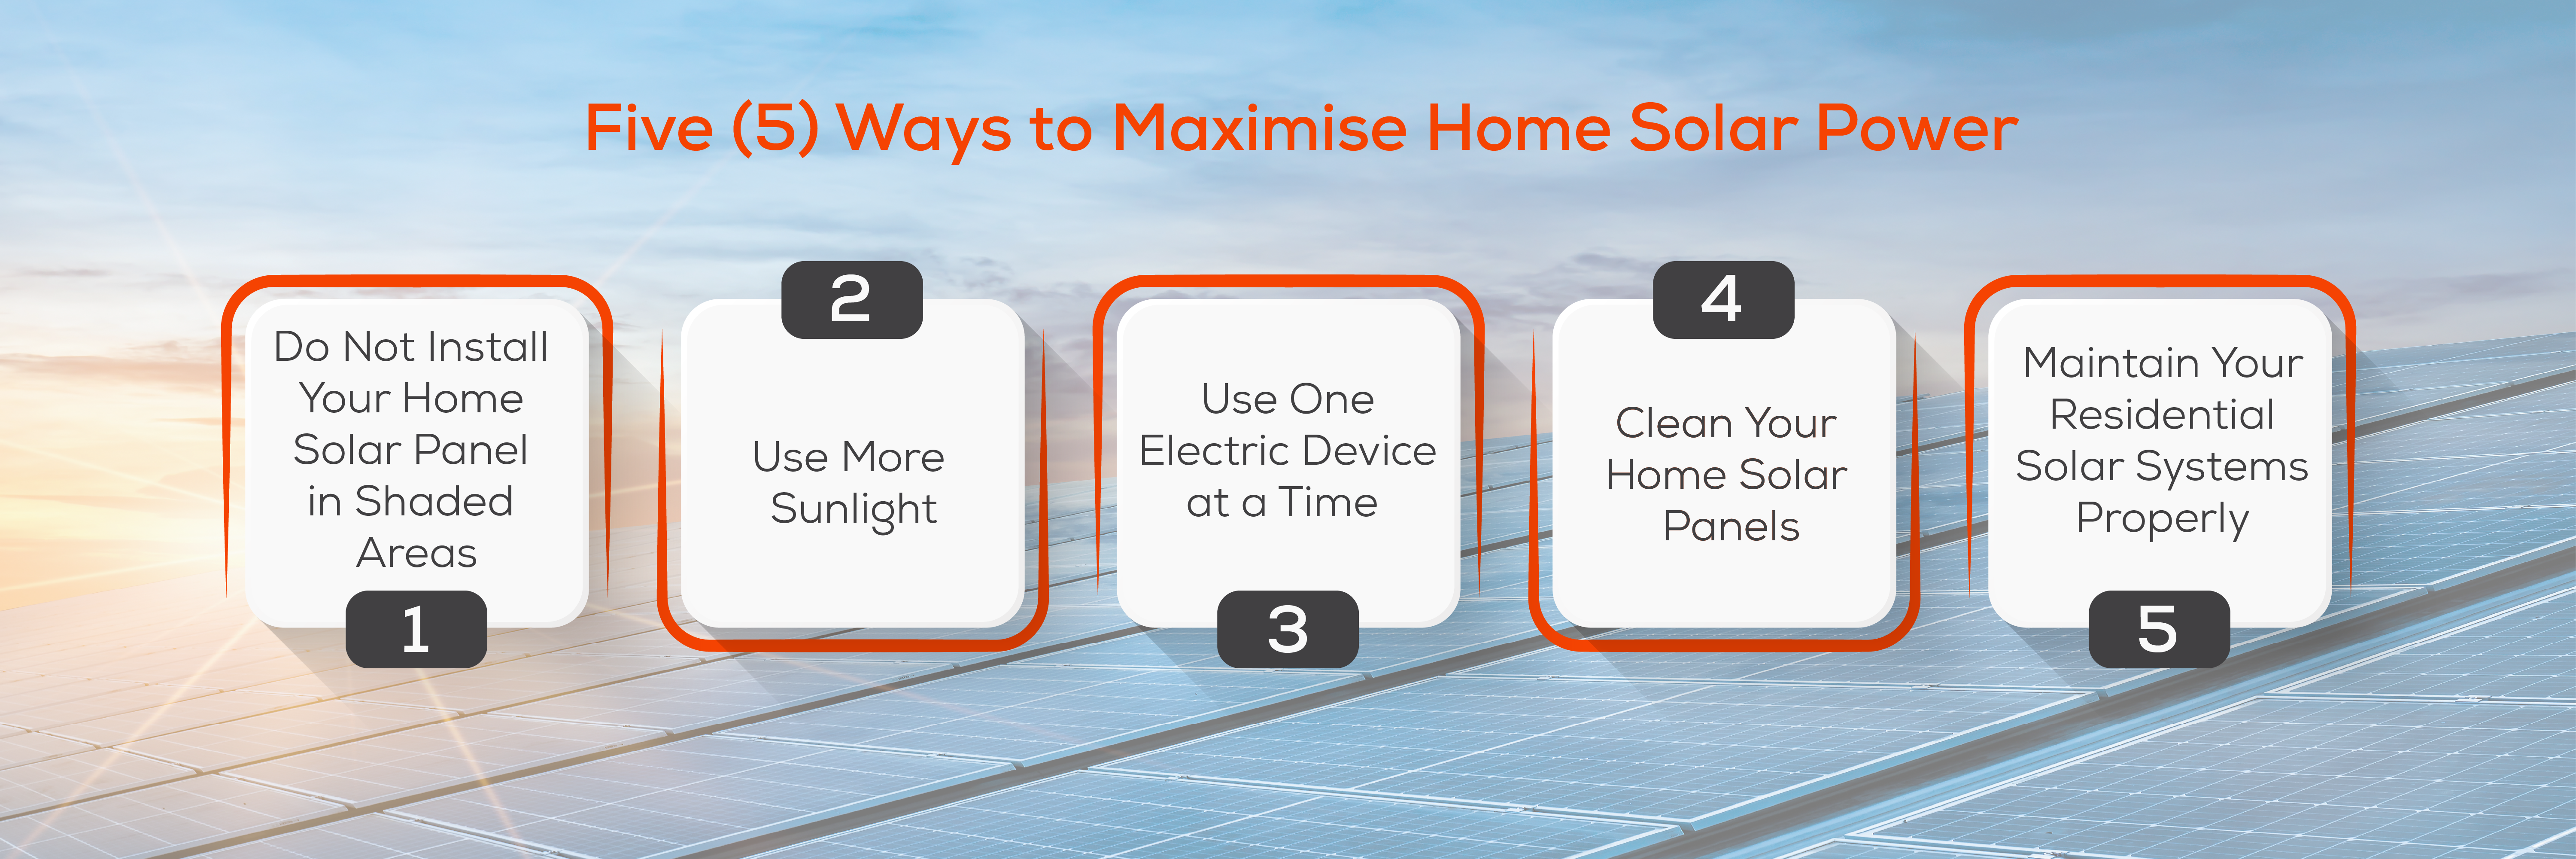 Five Ways to Maximise Home Solar